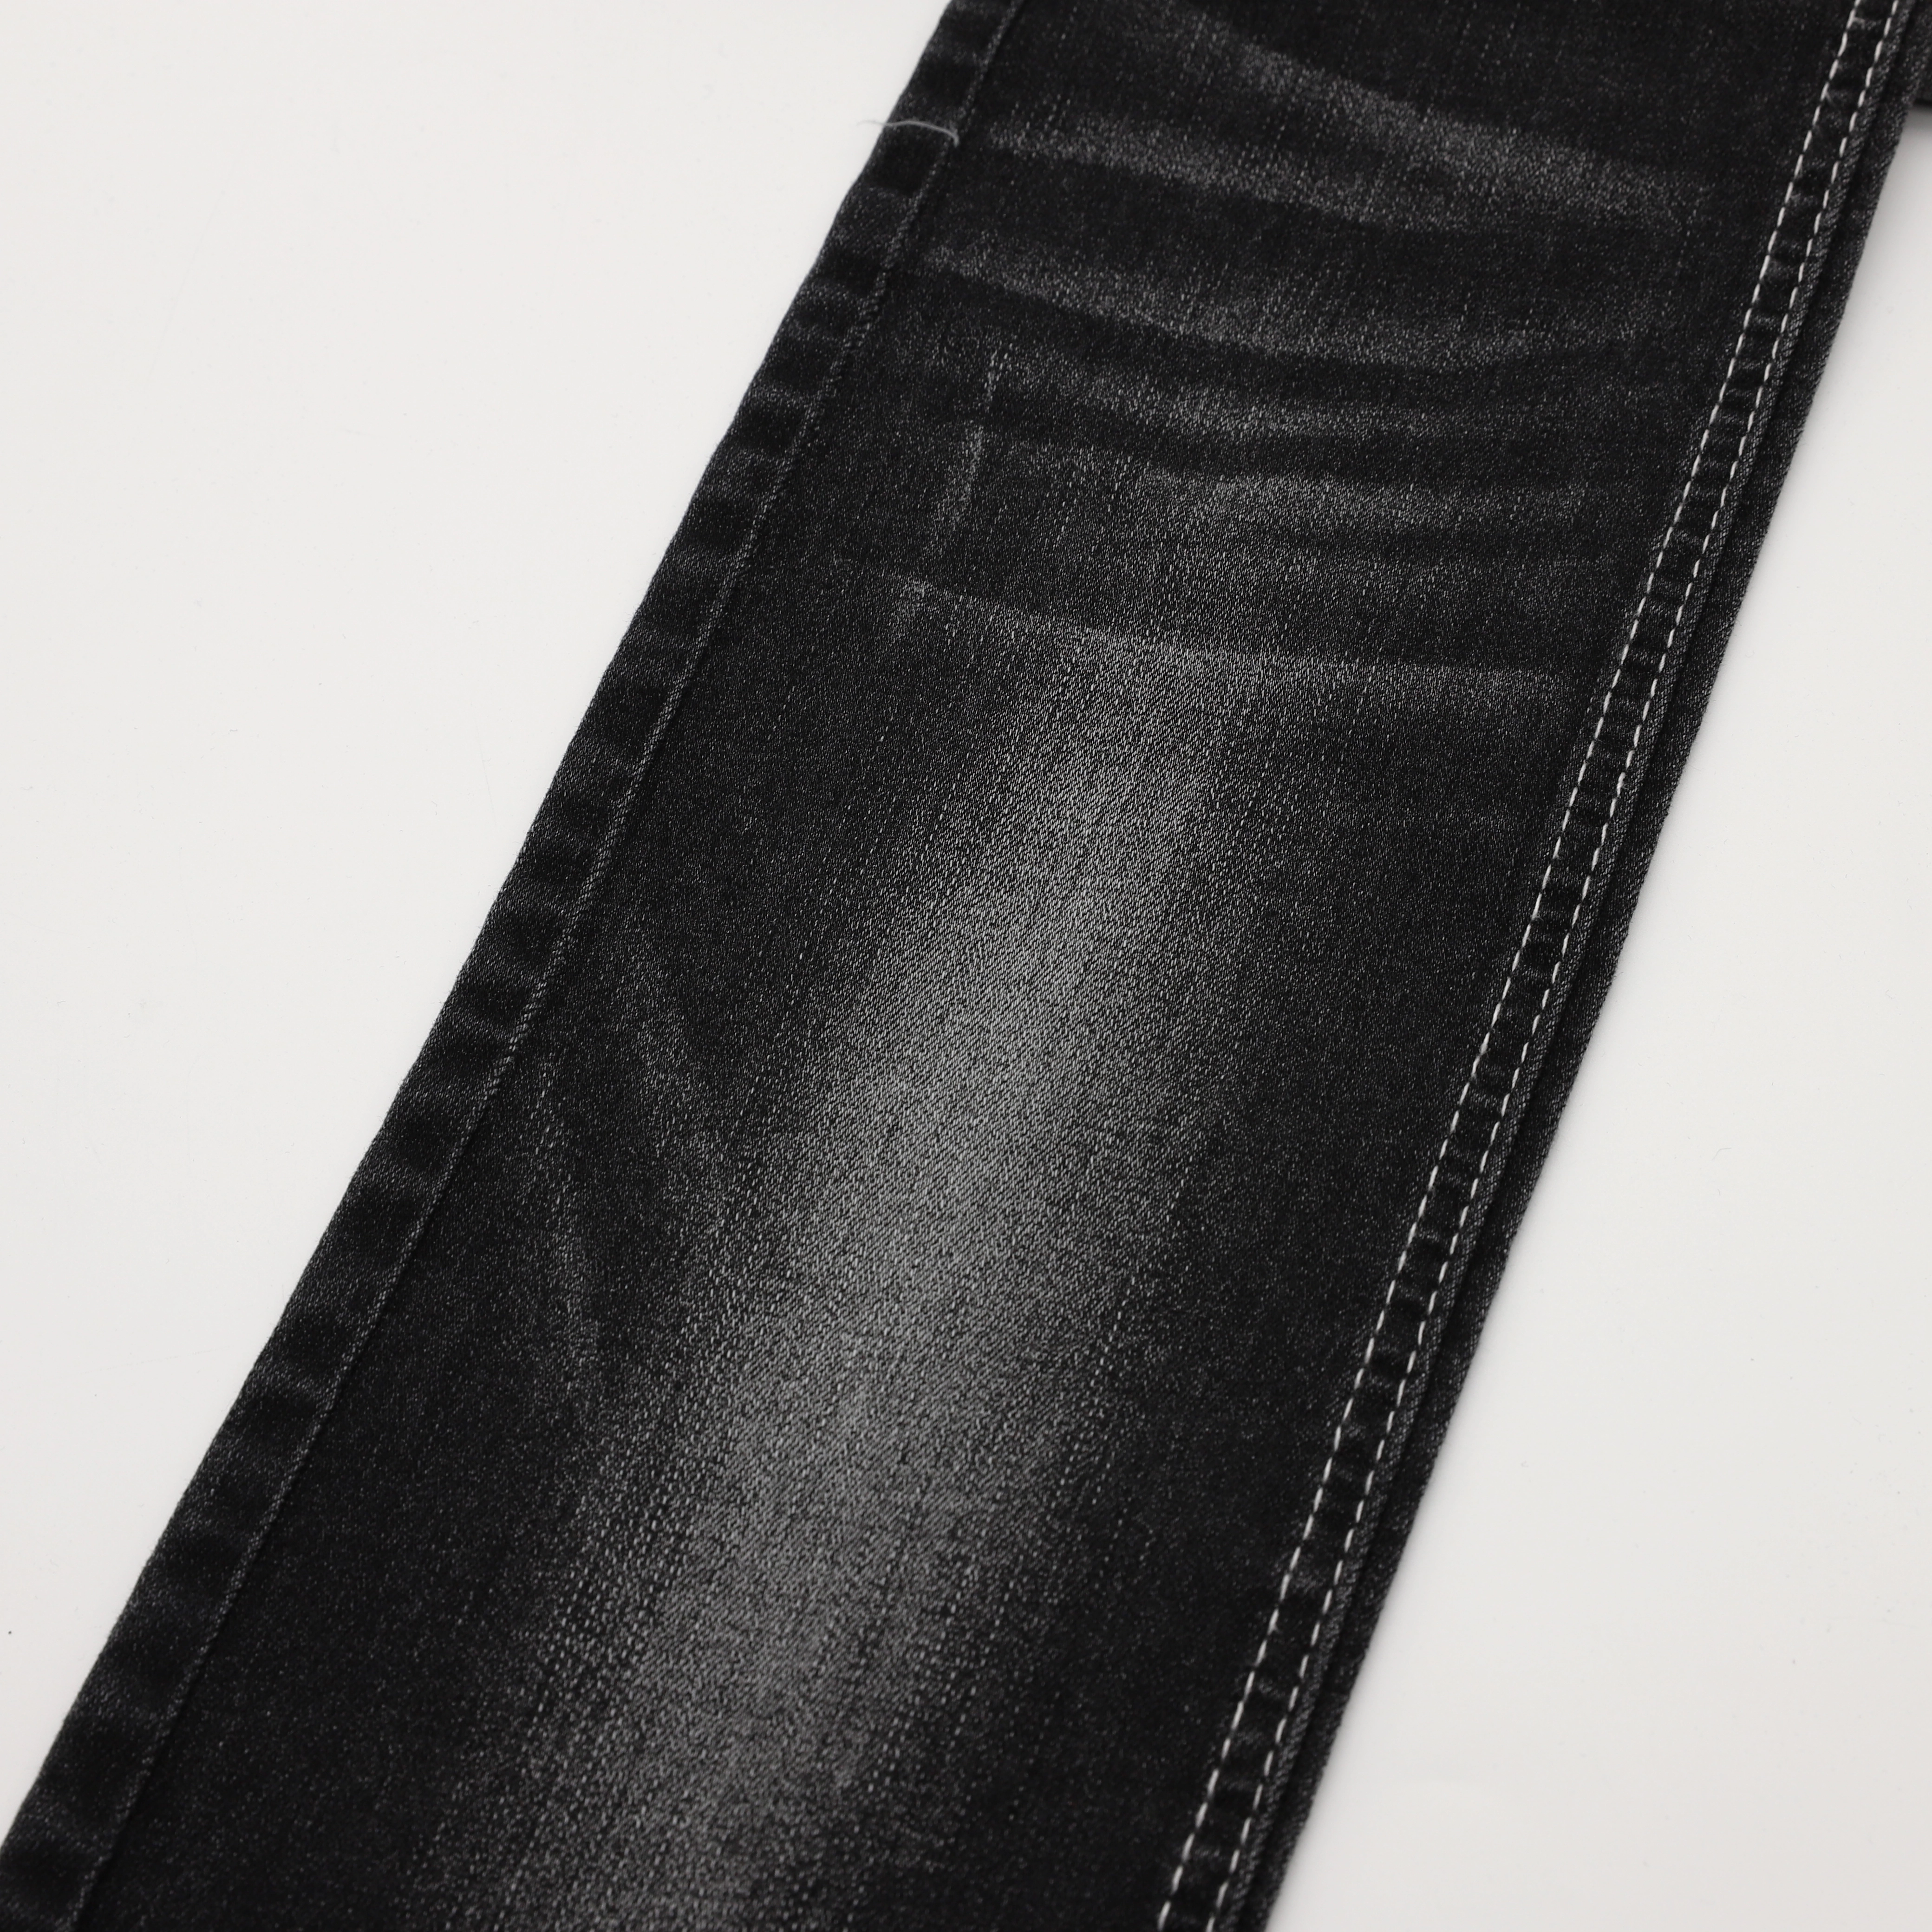 154B-3B 67%cotton  31%polyester  2%spandex high elastic denim fabric for jeans 4